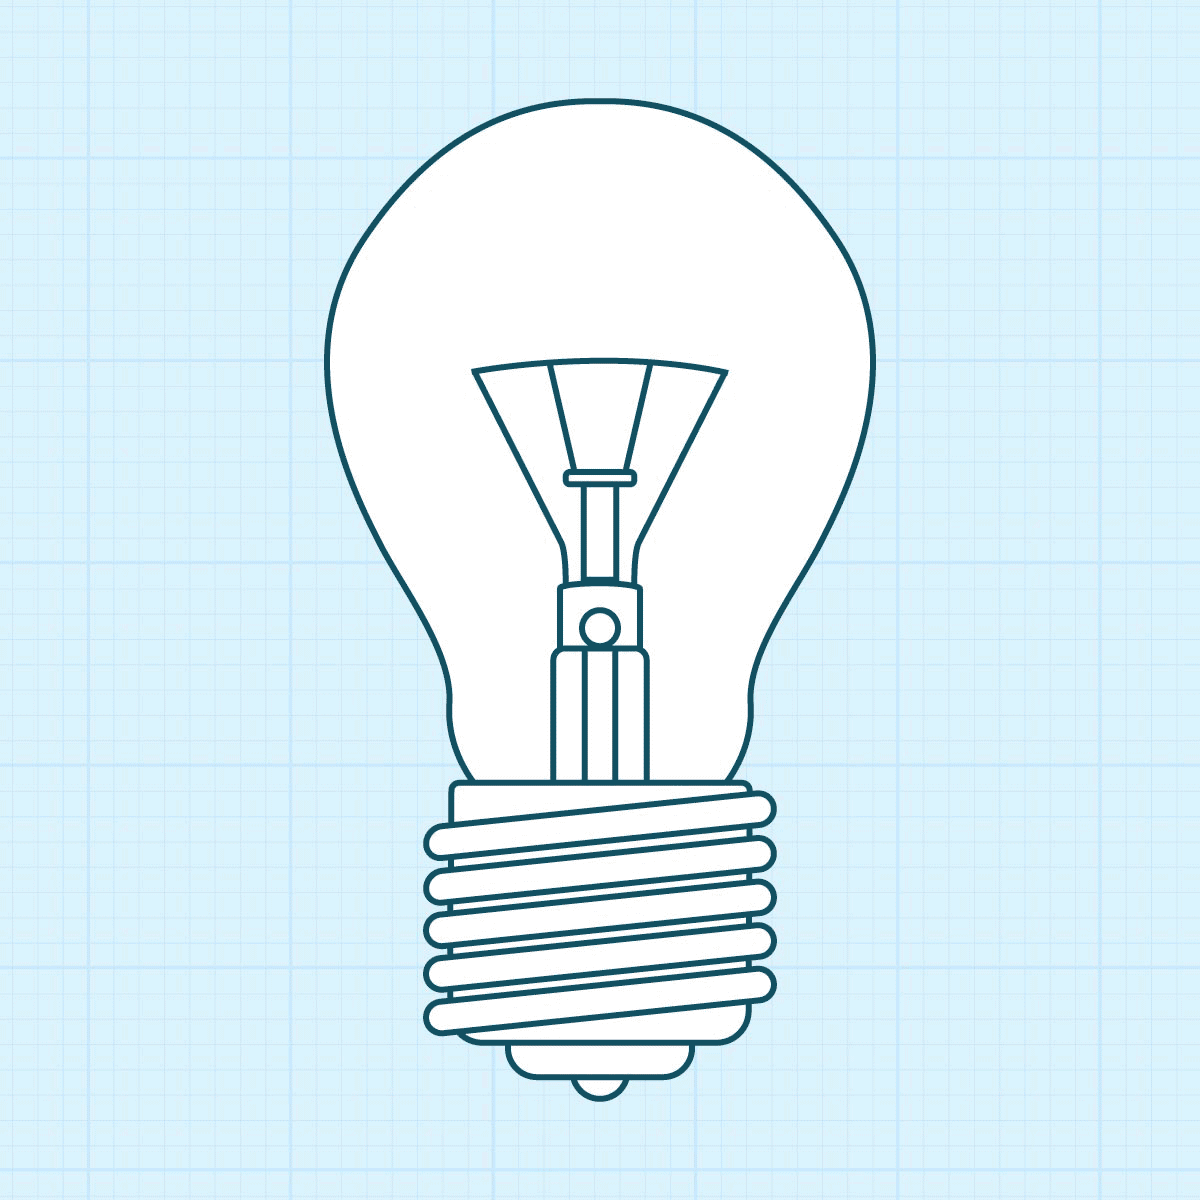 Drawing idea light bulb concept creative design Stock Vector Image & Art -  Alamy